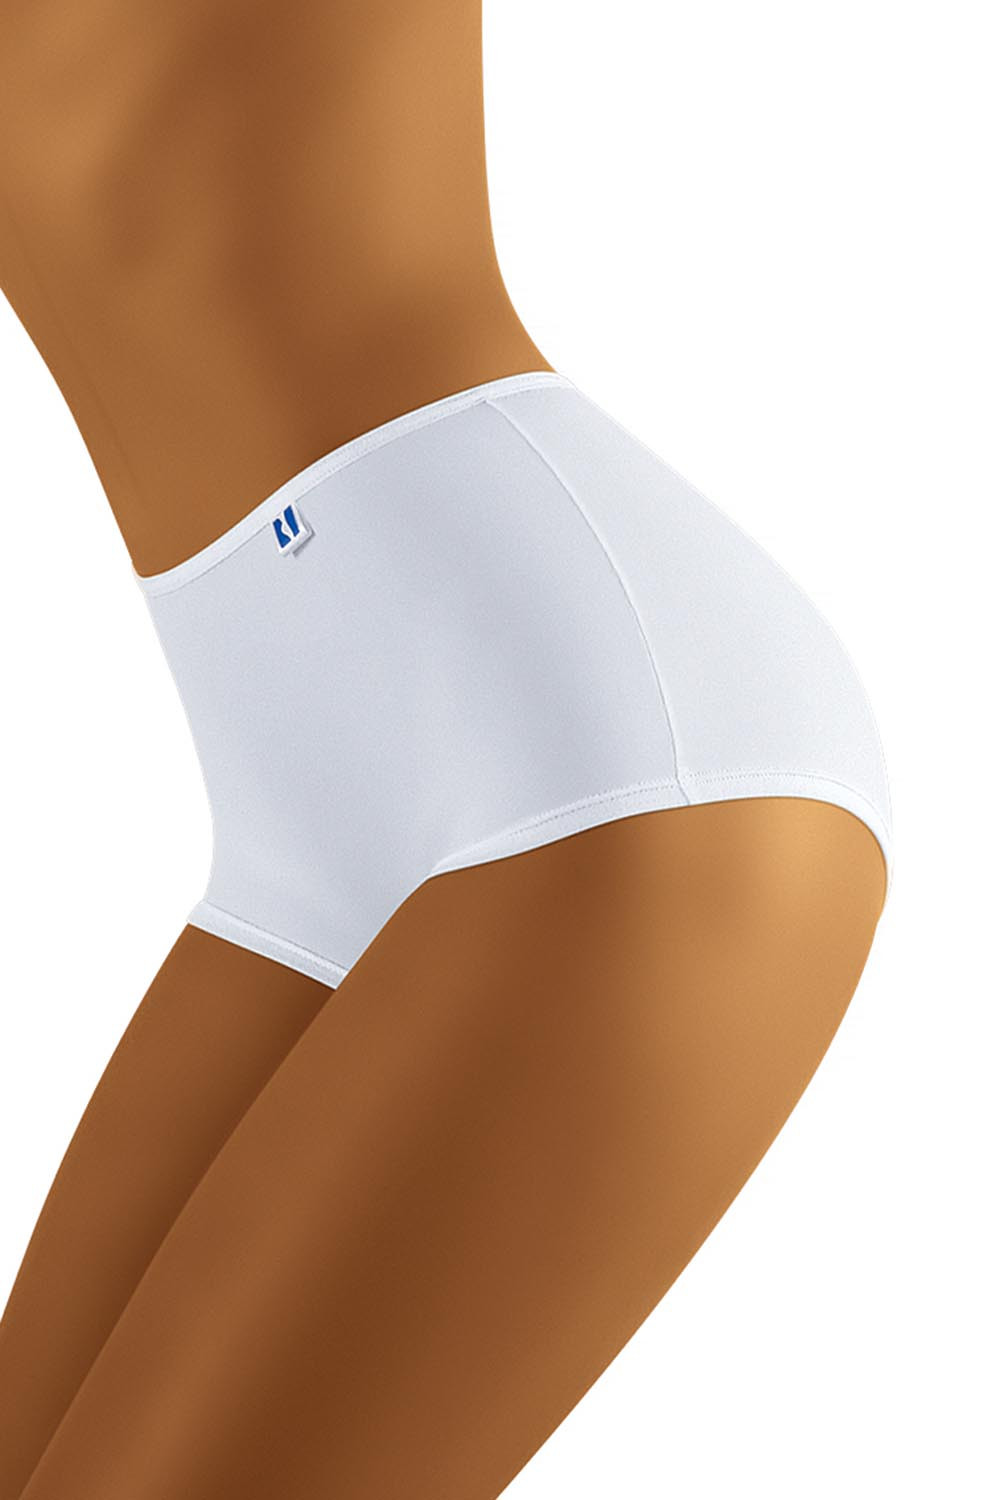 Wol-Bar Tahoo Shorts kolor:biały L